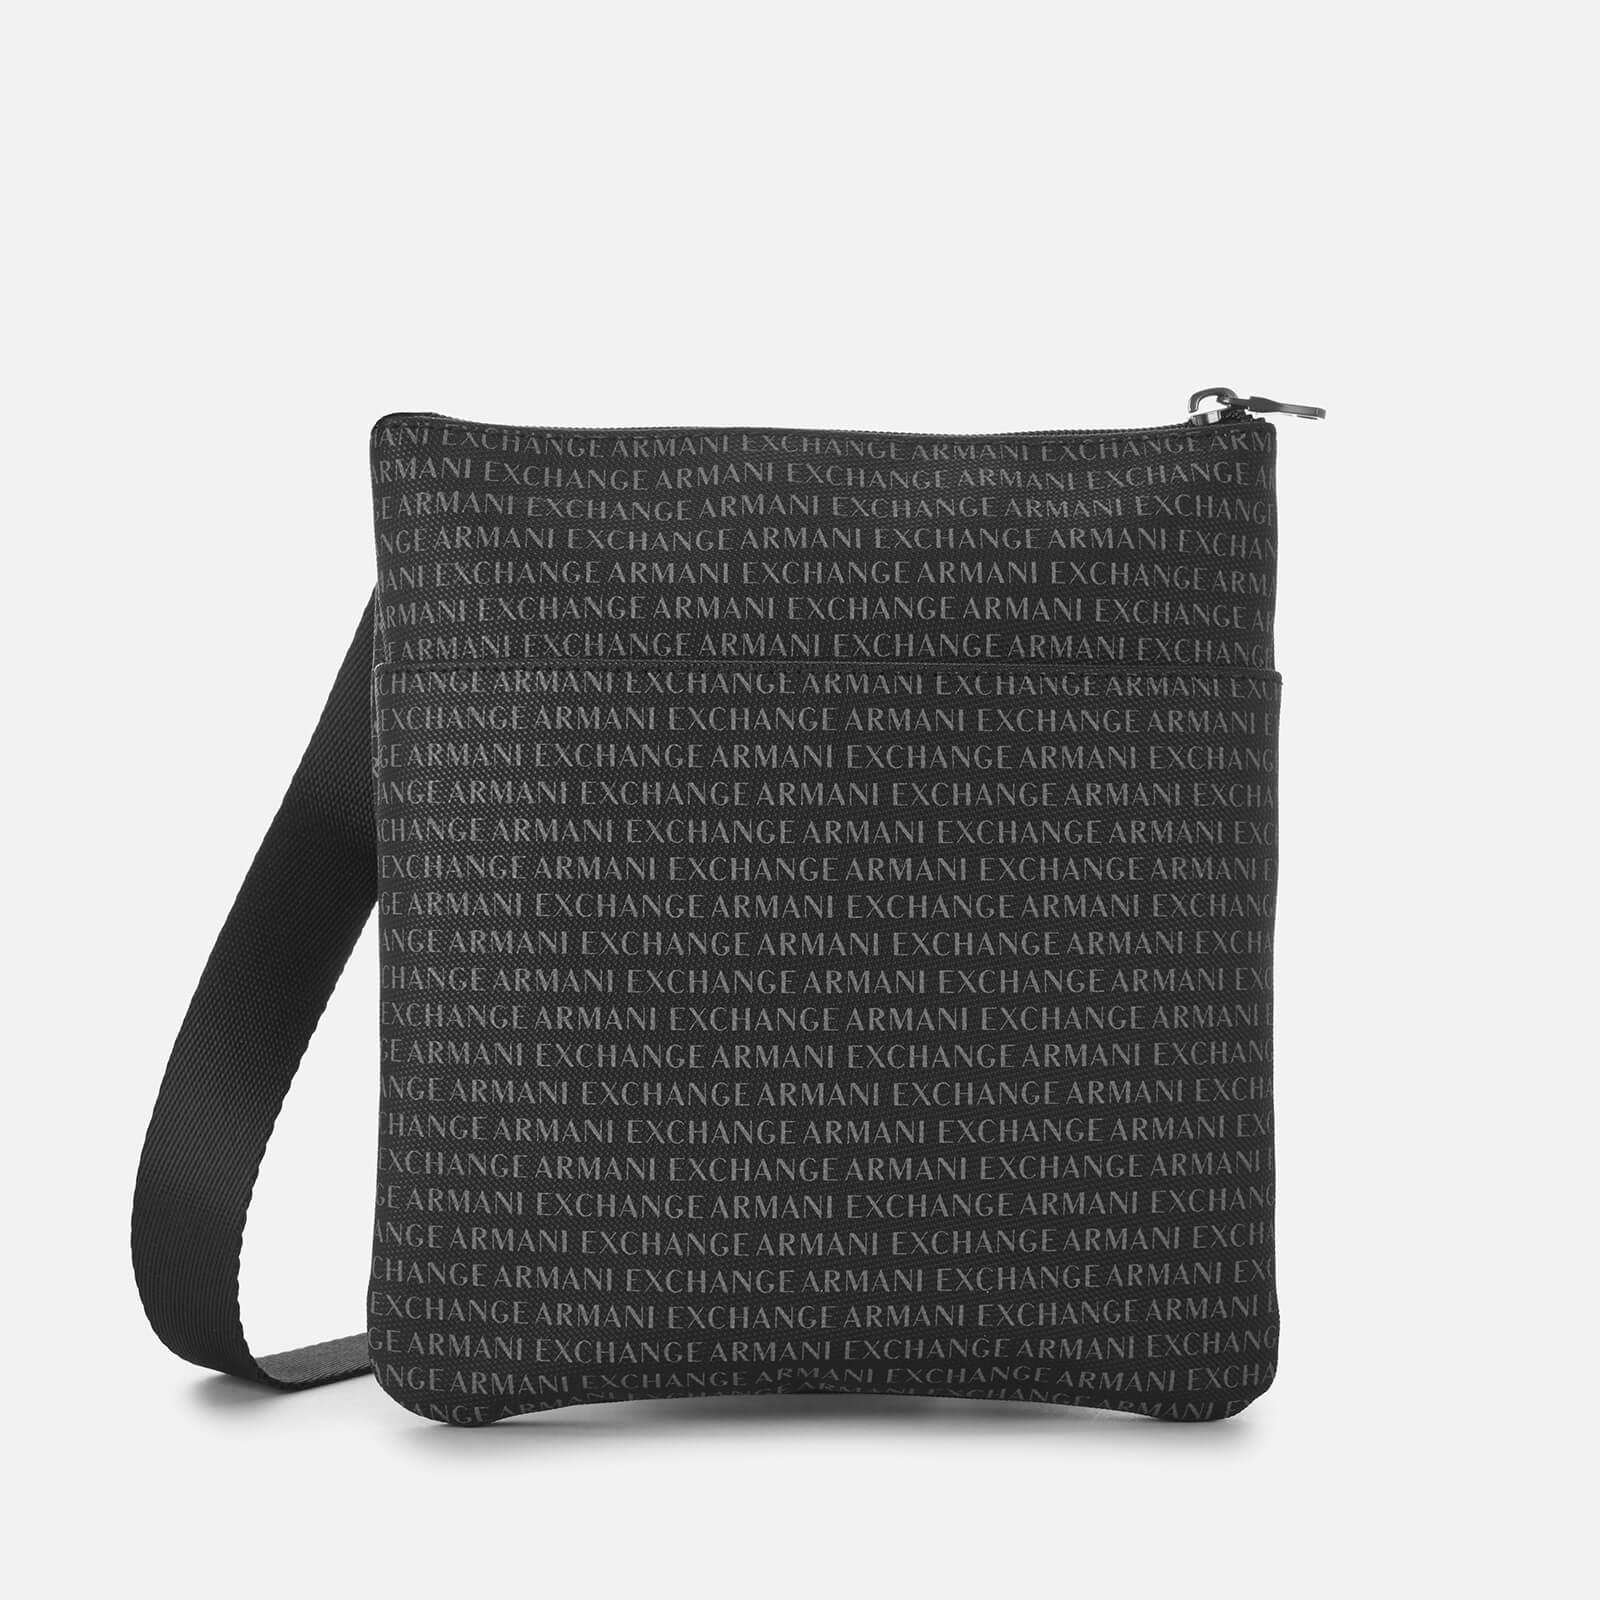 Armani Exchange All Over Print Cross Body Bag in Black for Men - Lyst